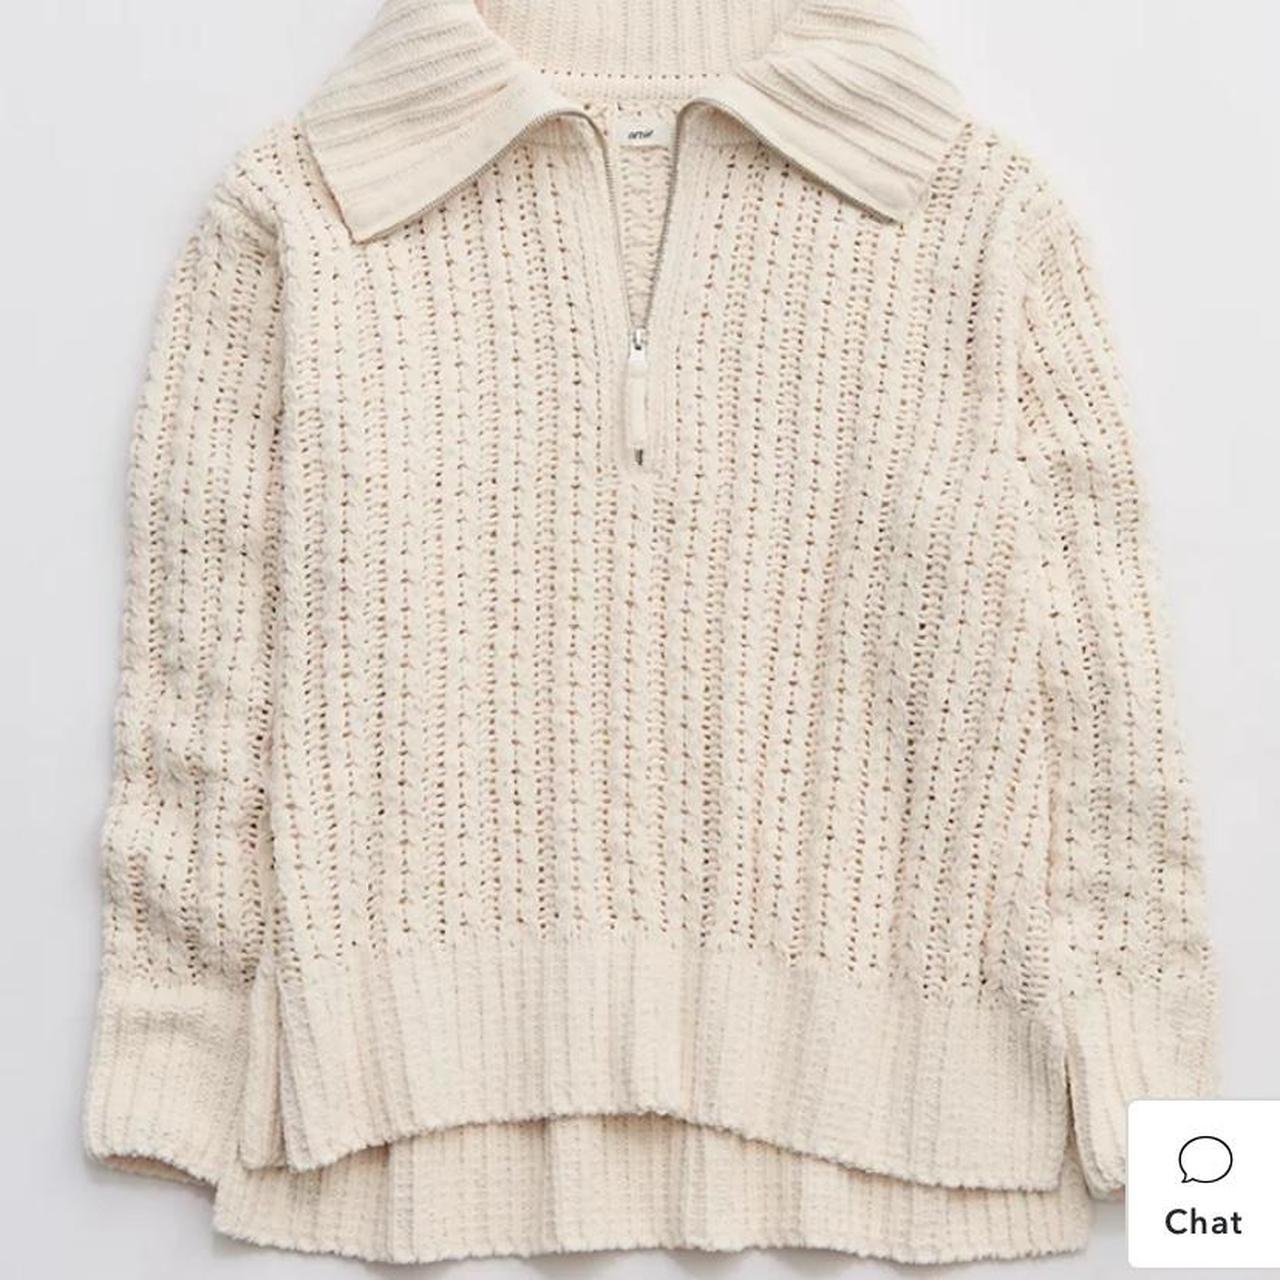 Aerie white/cream knit quarter zip, super soft and... - Depop